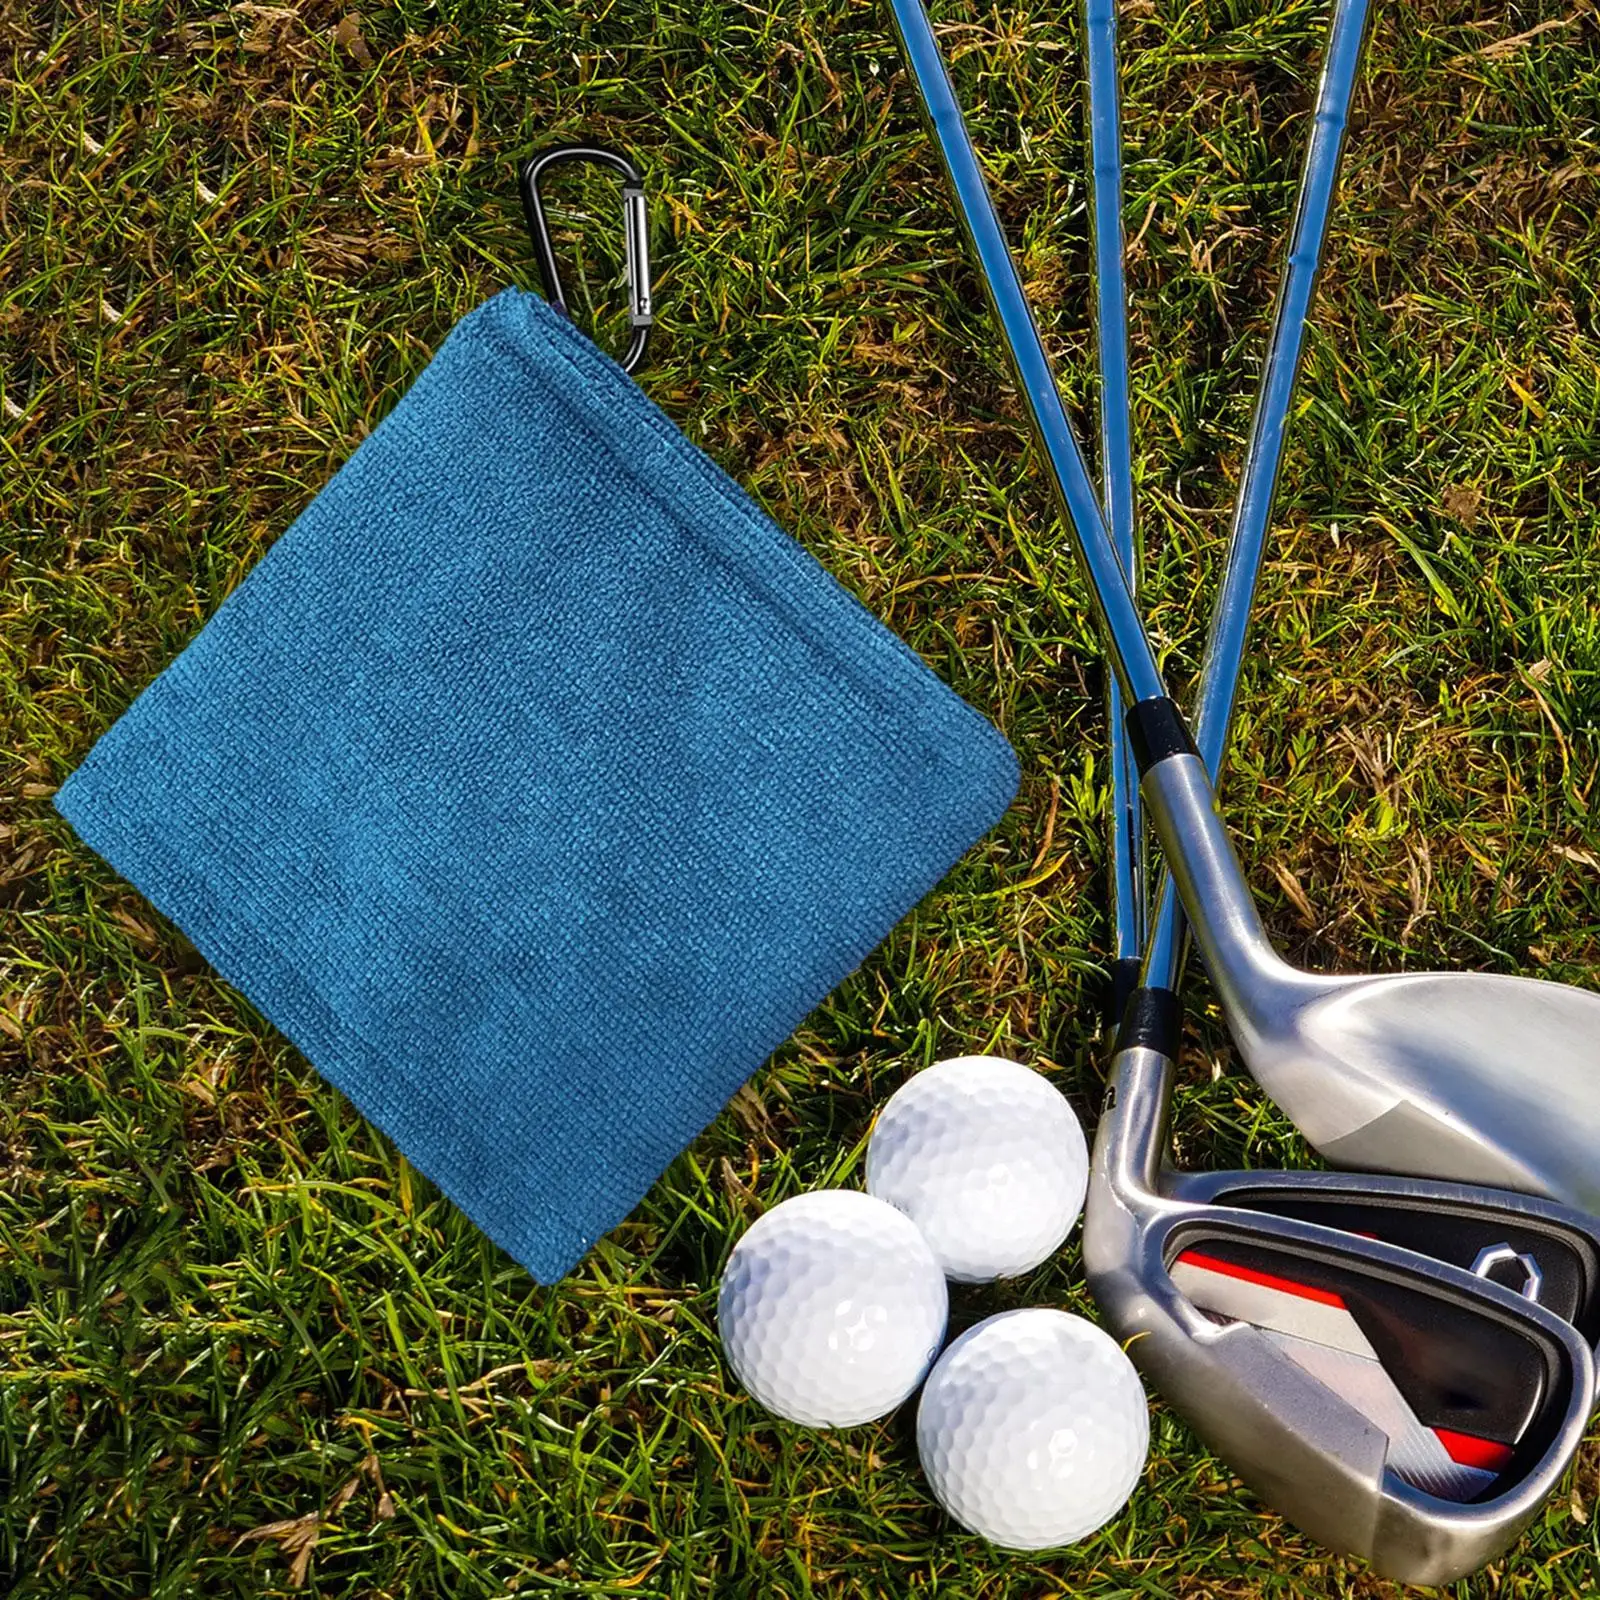 Golf Ball Towel Small Portable Microfiber 5.5 x 5.5 inch Wiping Cloth Golf Ball